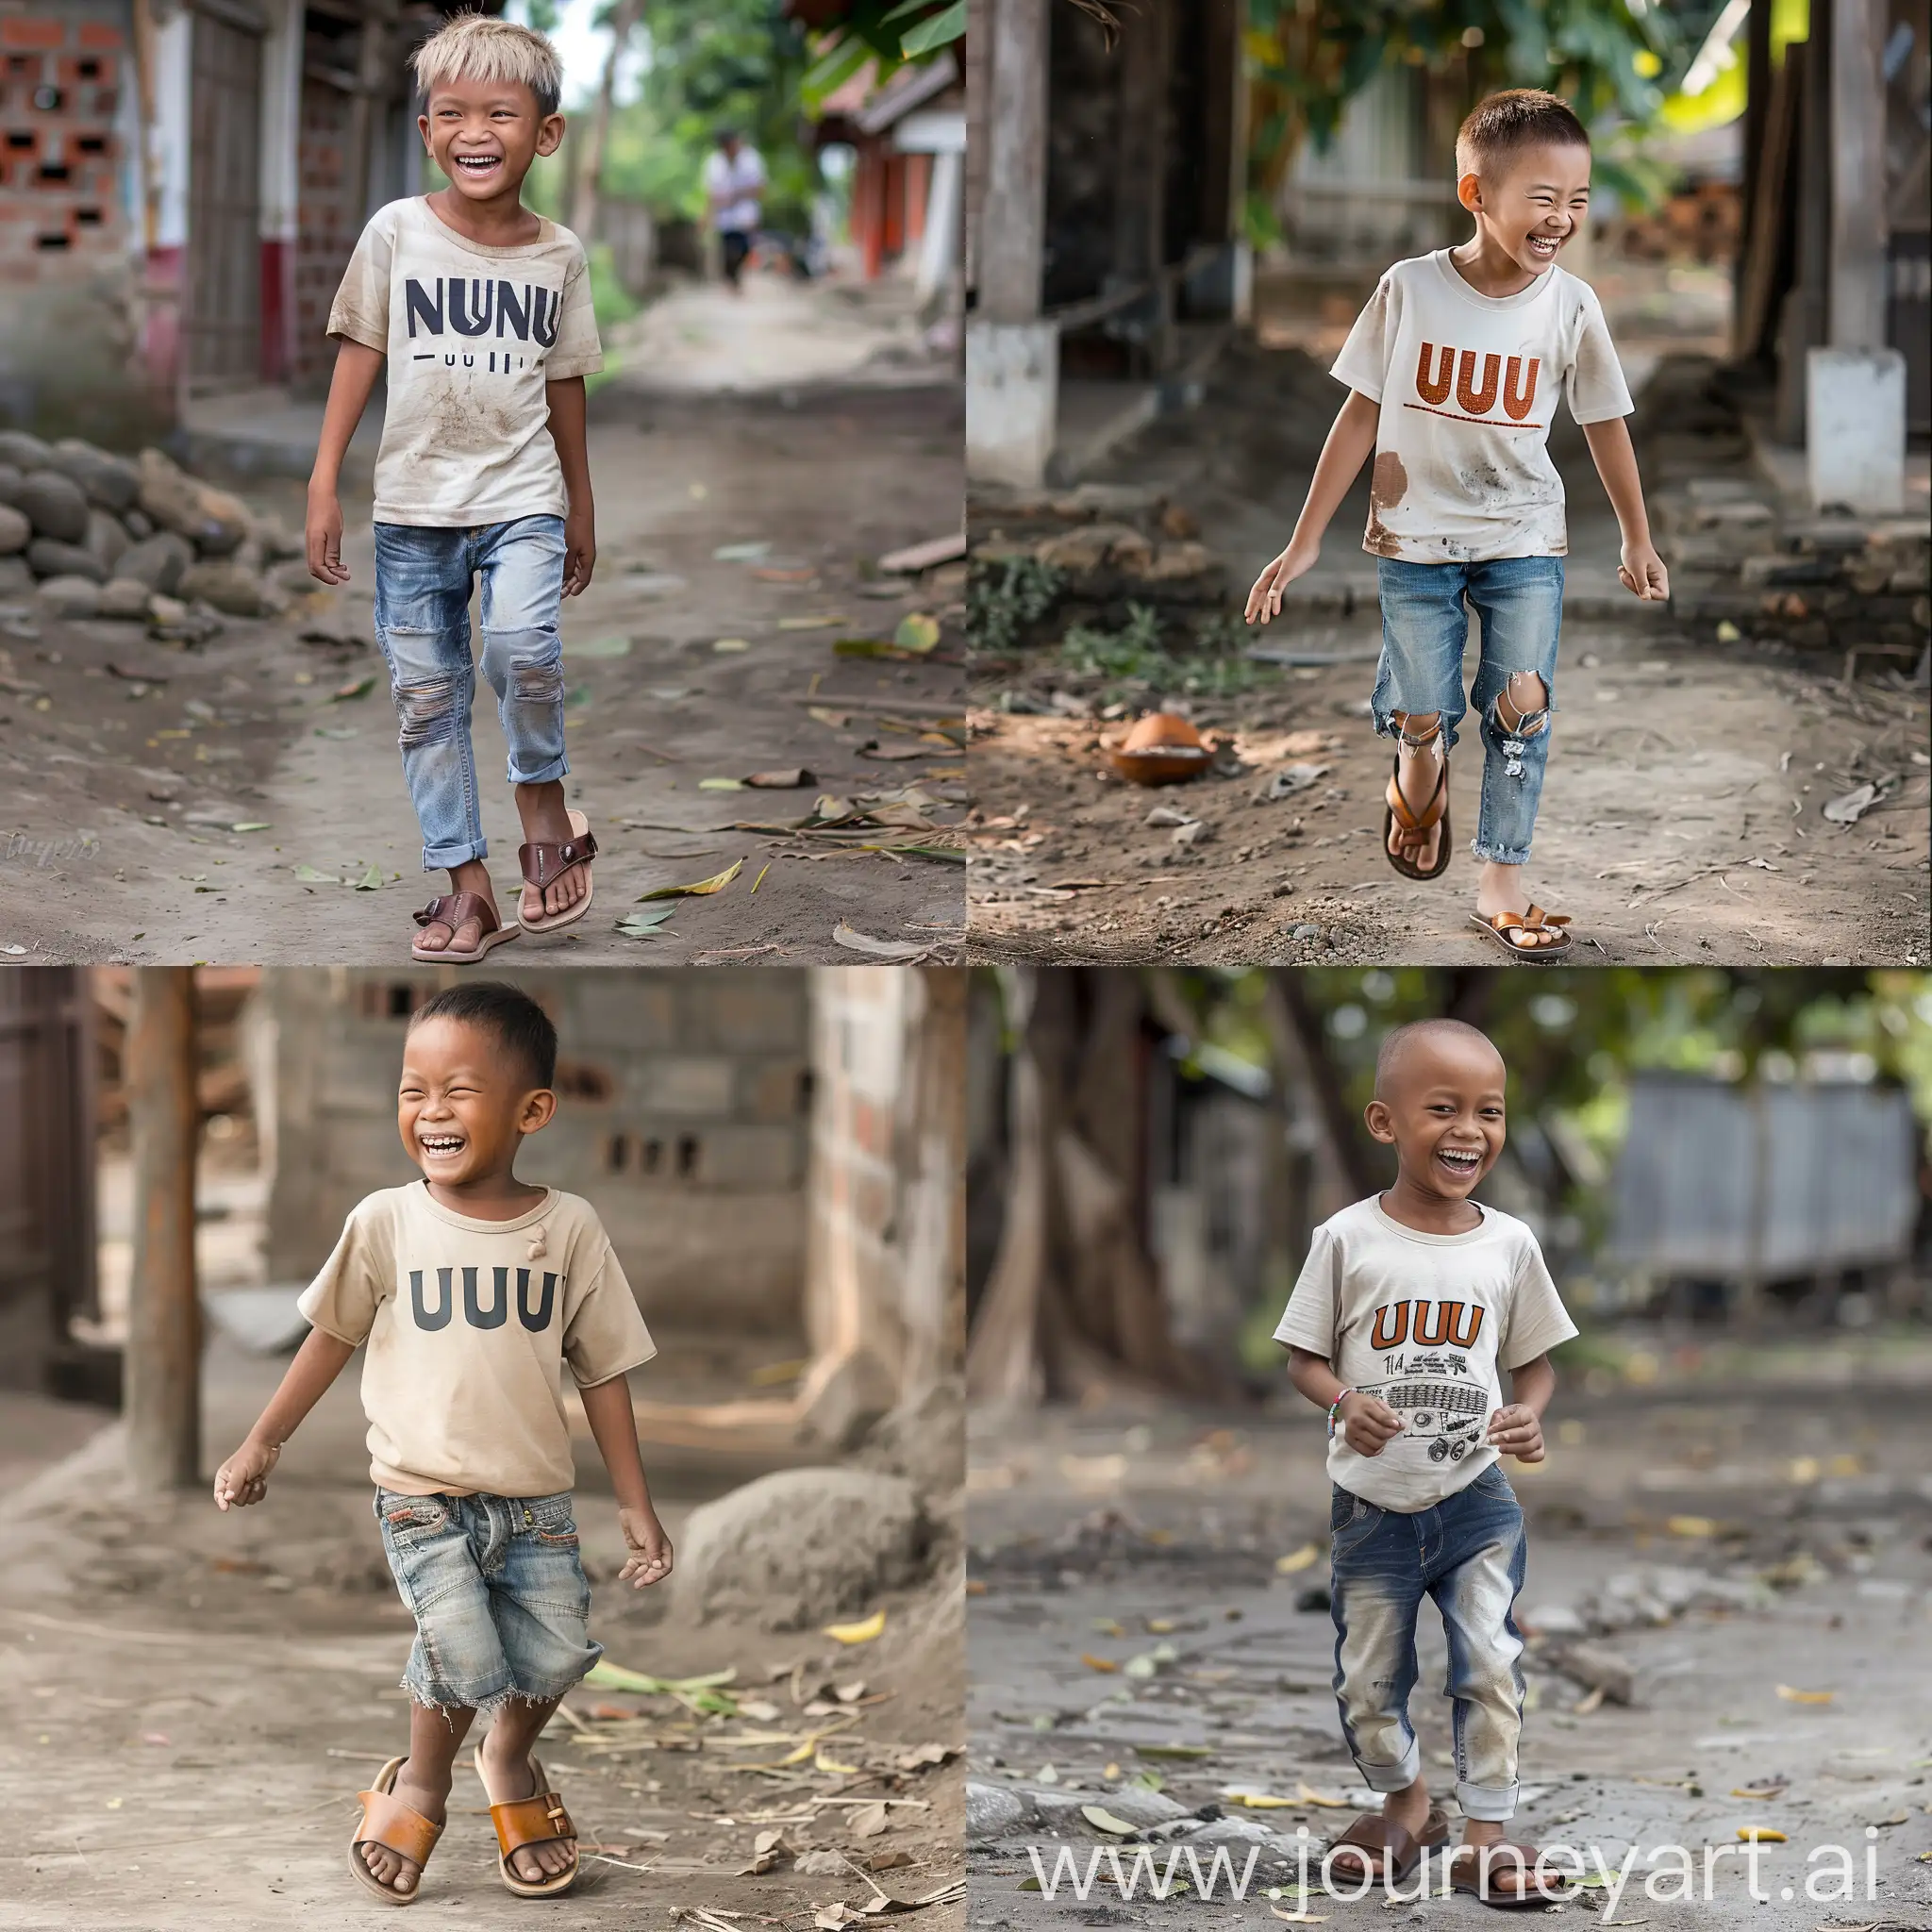 Cheerful-Indonesian-Teenager-Strolling-Through-Village-in-Stylish-NUNU-Tshirt-and-Jeans